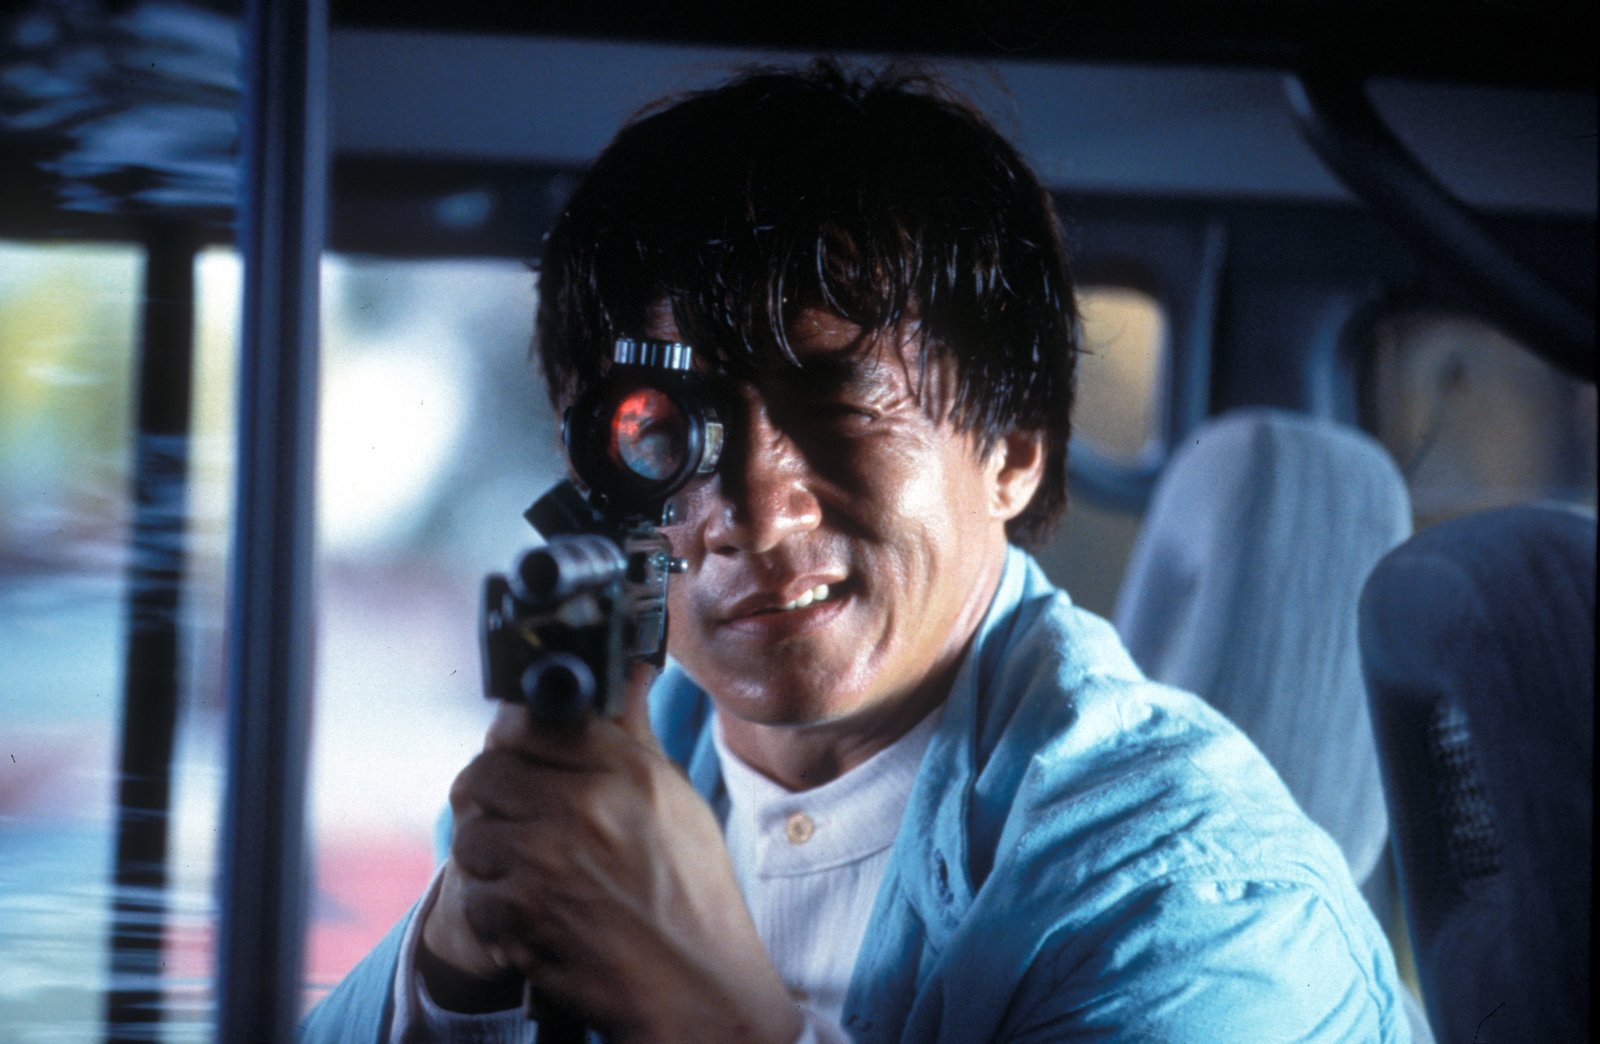 Jackie Chan’s First Strike - Erstschlag - Uncut Mediabook Edition  (Blu-ray Disc)